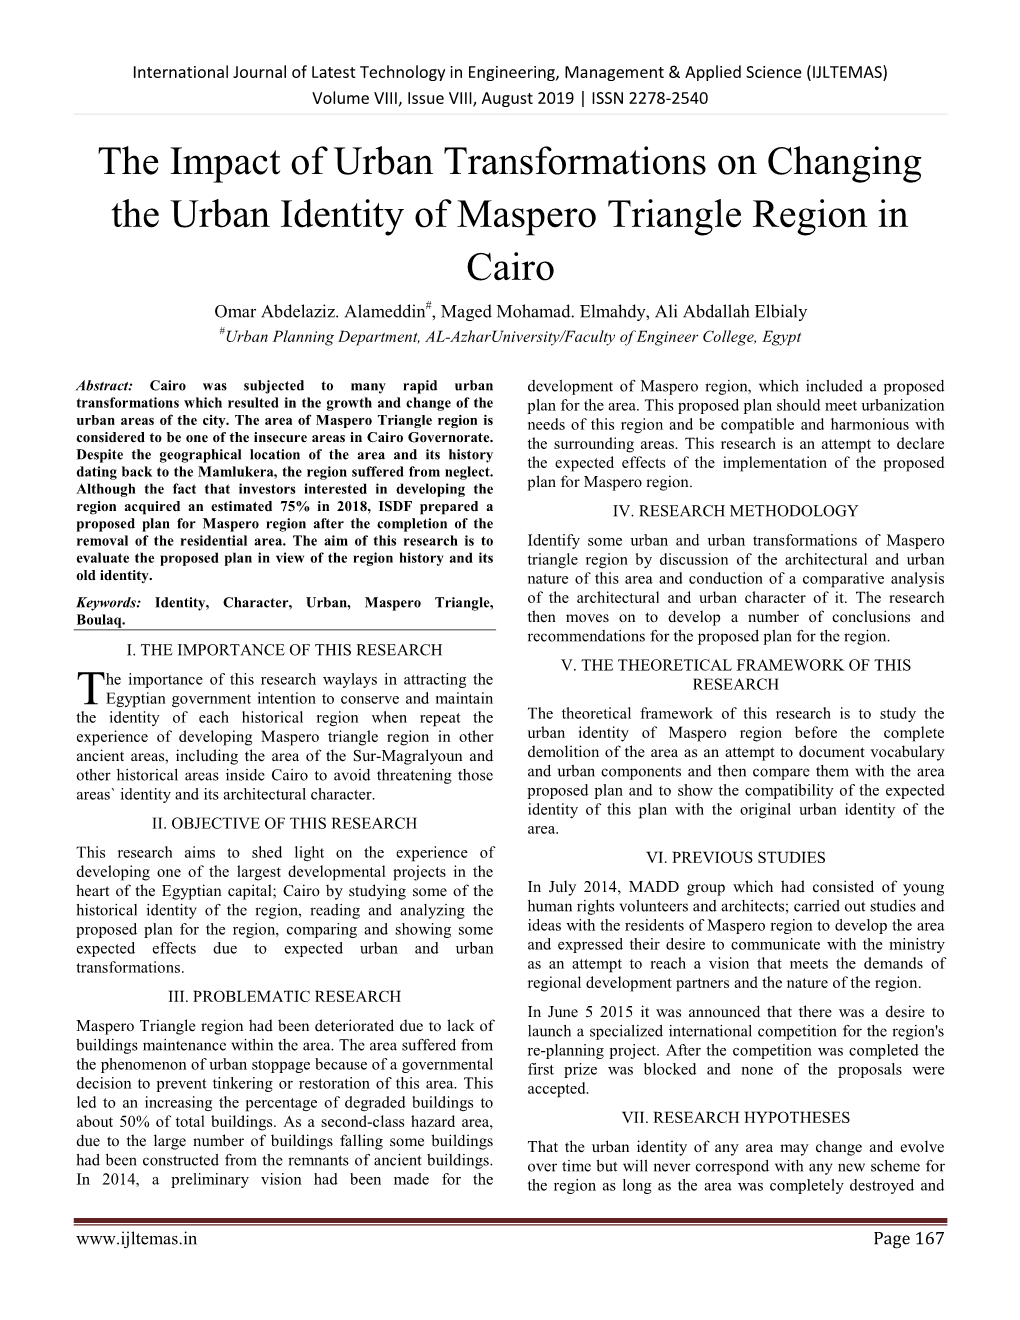 The Impact of Urban Transformations on Changing the Urban Identity of Maspero Triangle Region in Cairo Omar Abdelaziz